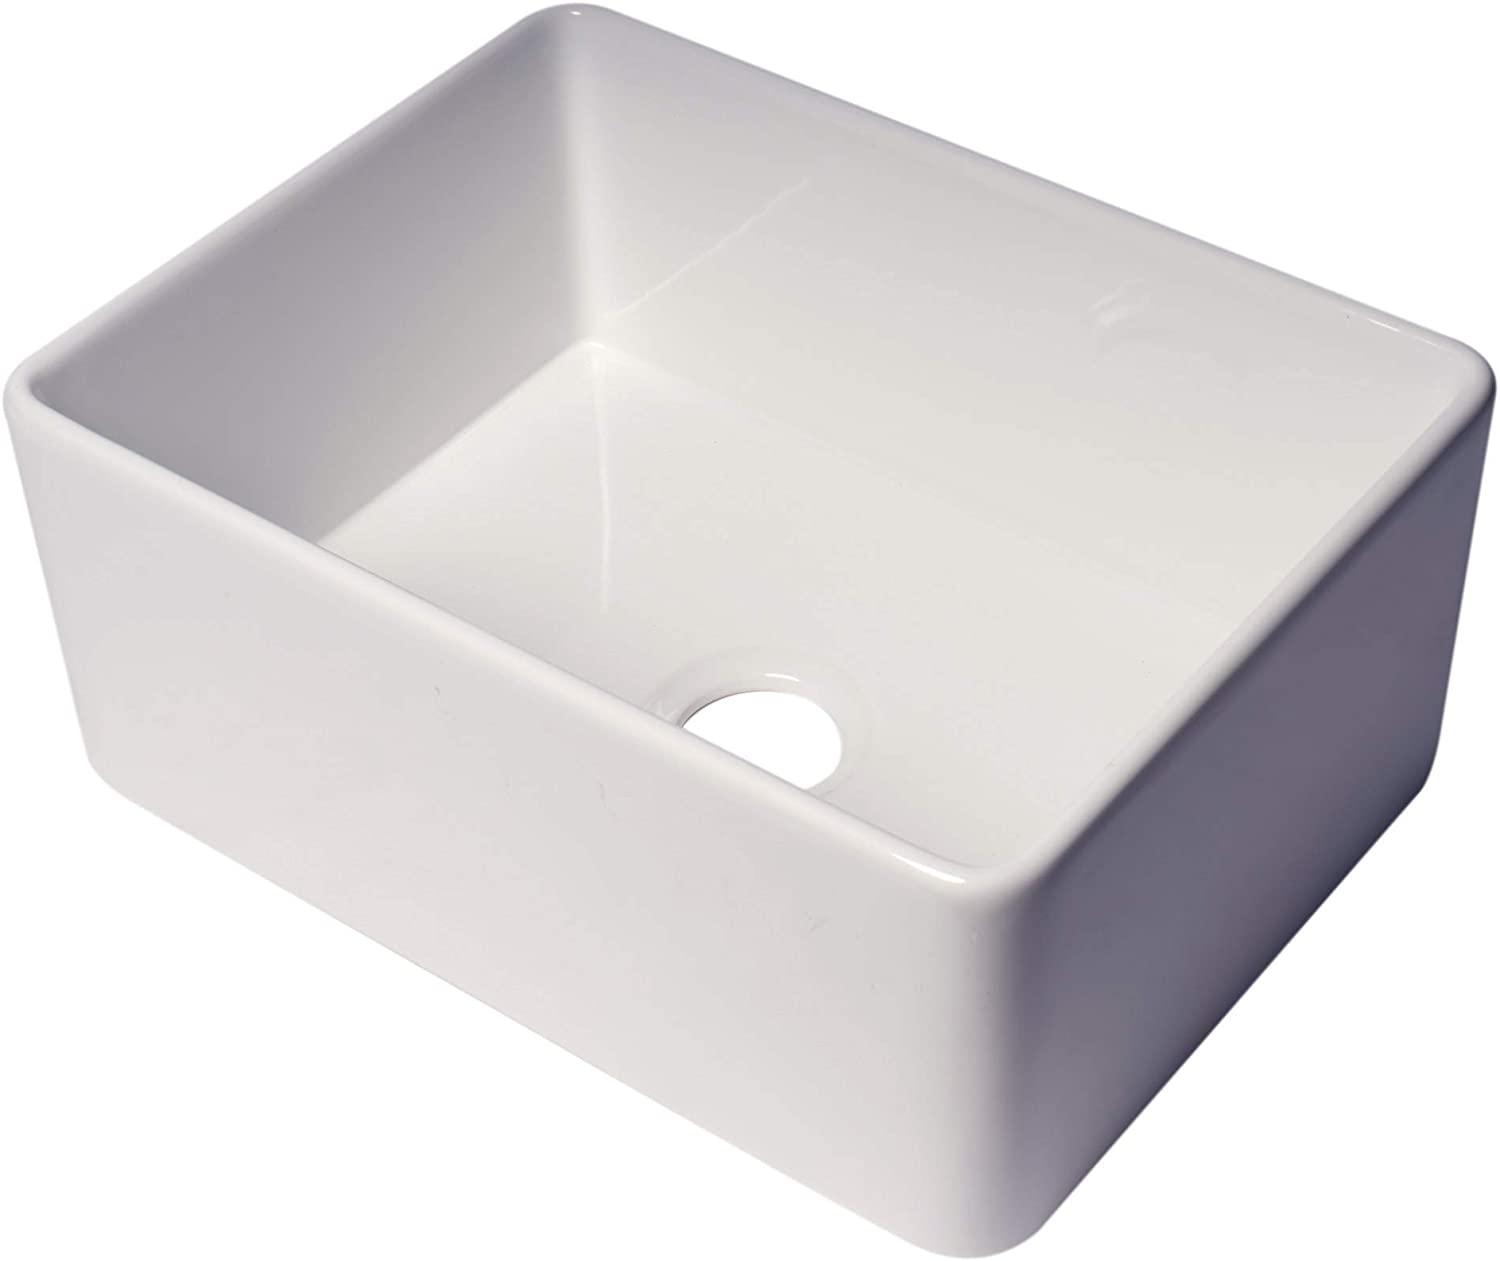 Alfi ABF2418-W Kitchen Sink, White